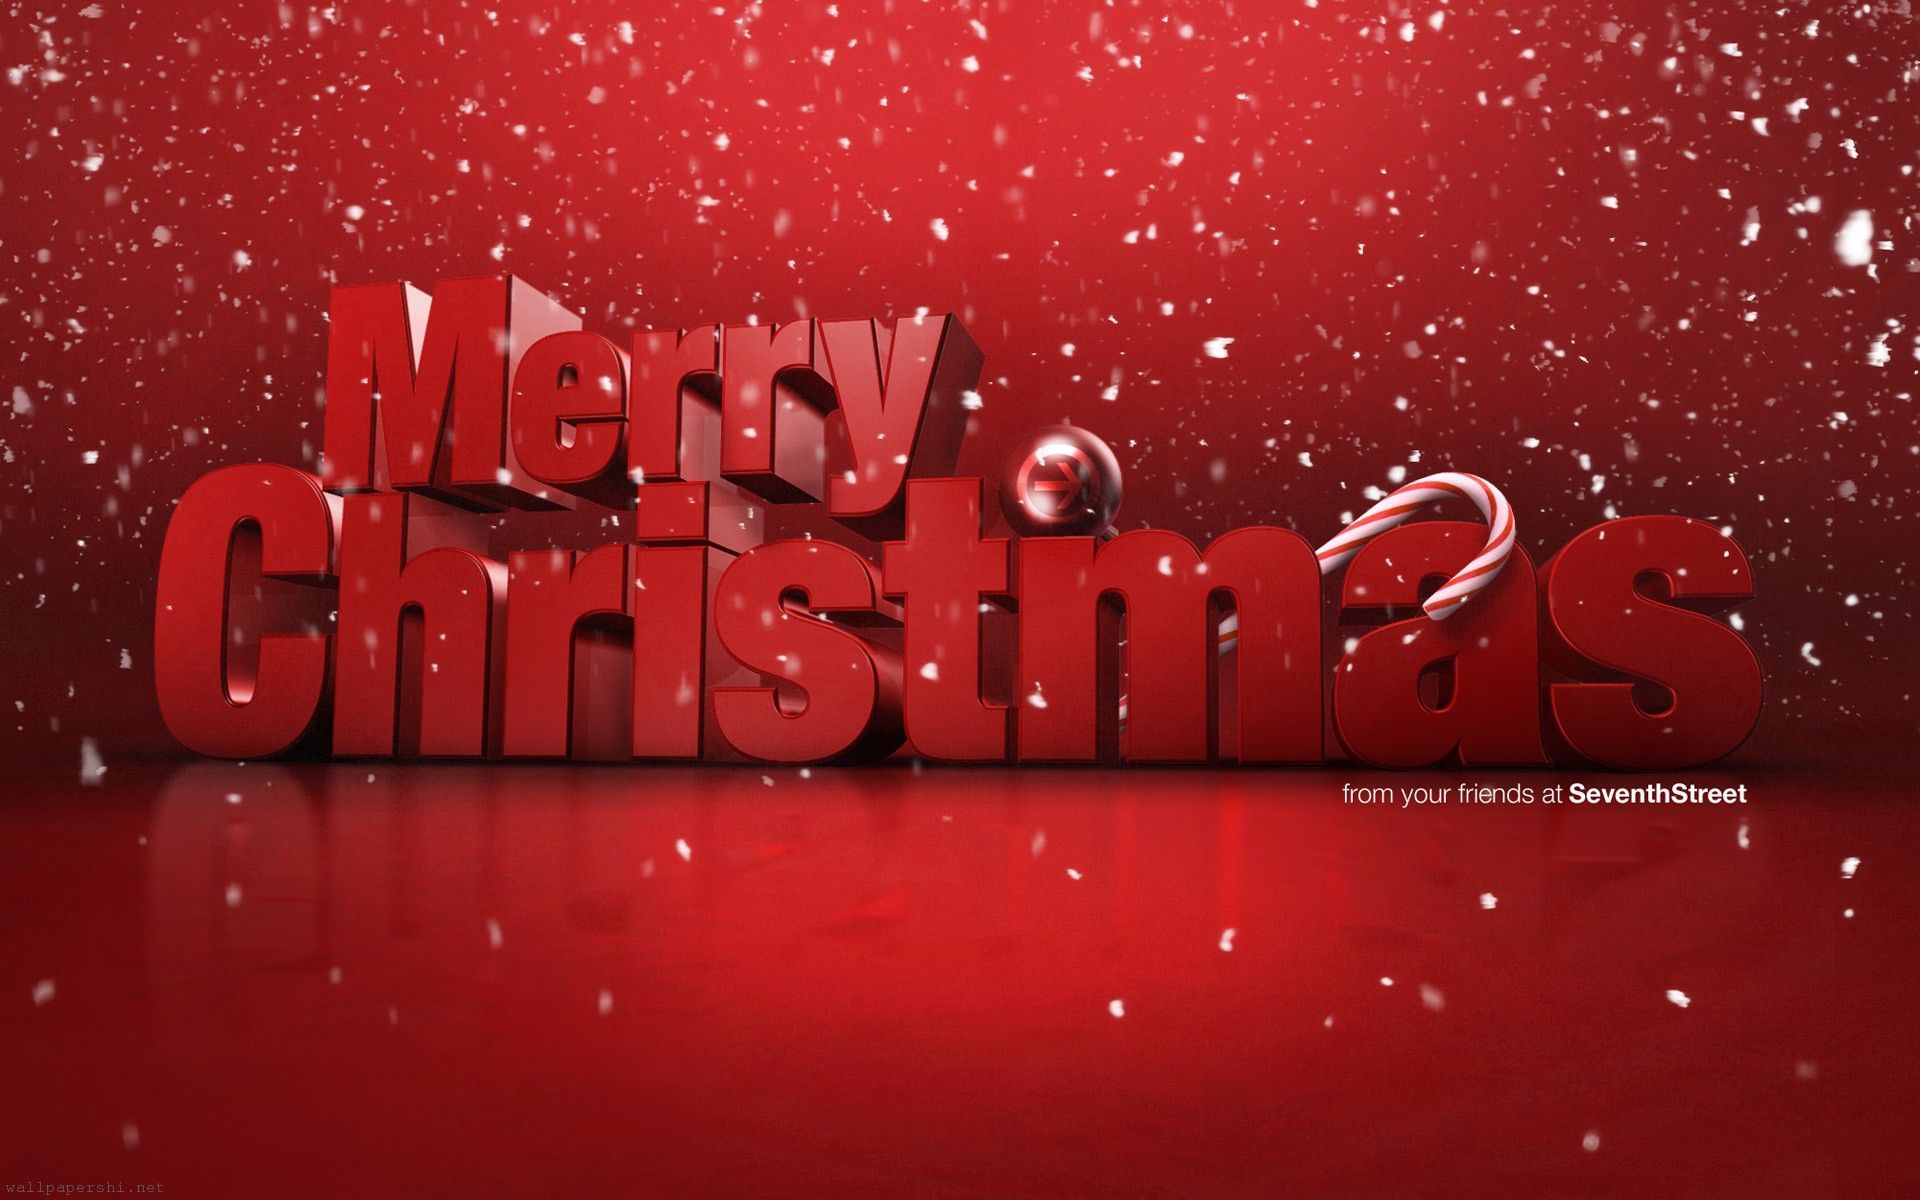 Facebook Christmas Cover wallpaper. Merry christmas wallpaper, Merry christmas wishes, Christmas wallpaper hd